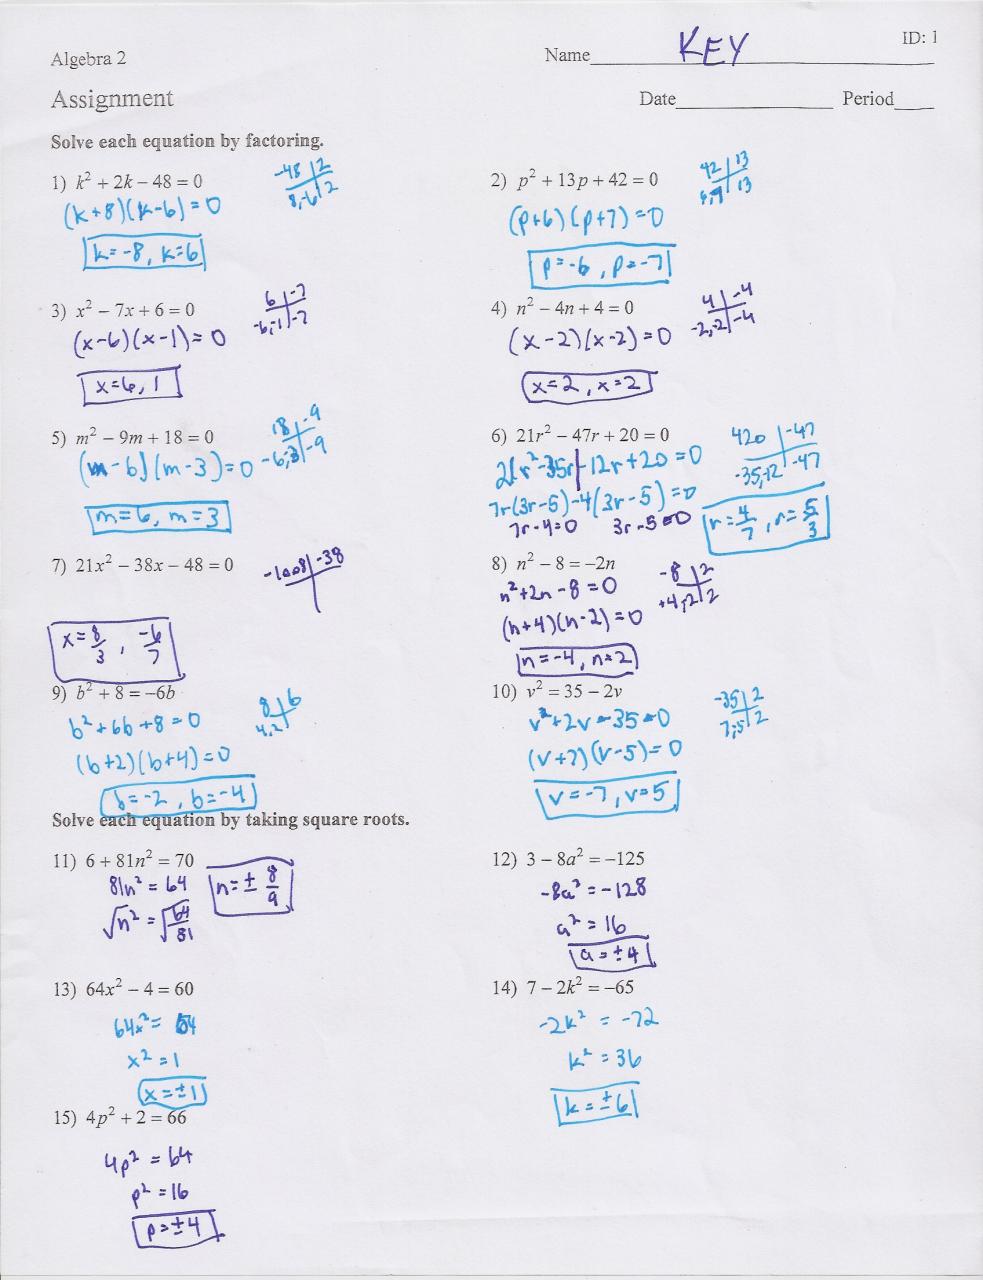 Algebra 2 Factoring Quadratics Worksheet